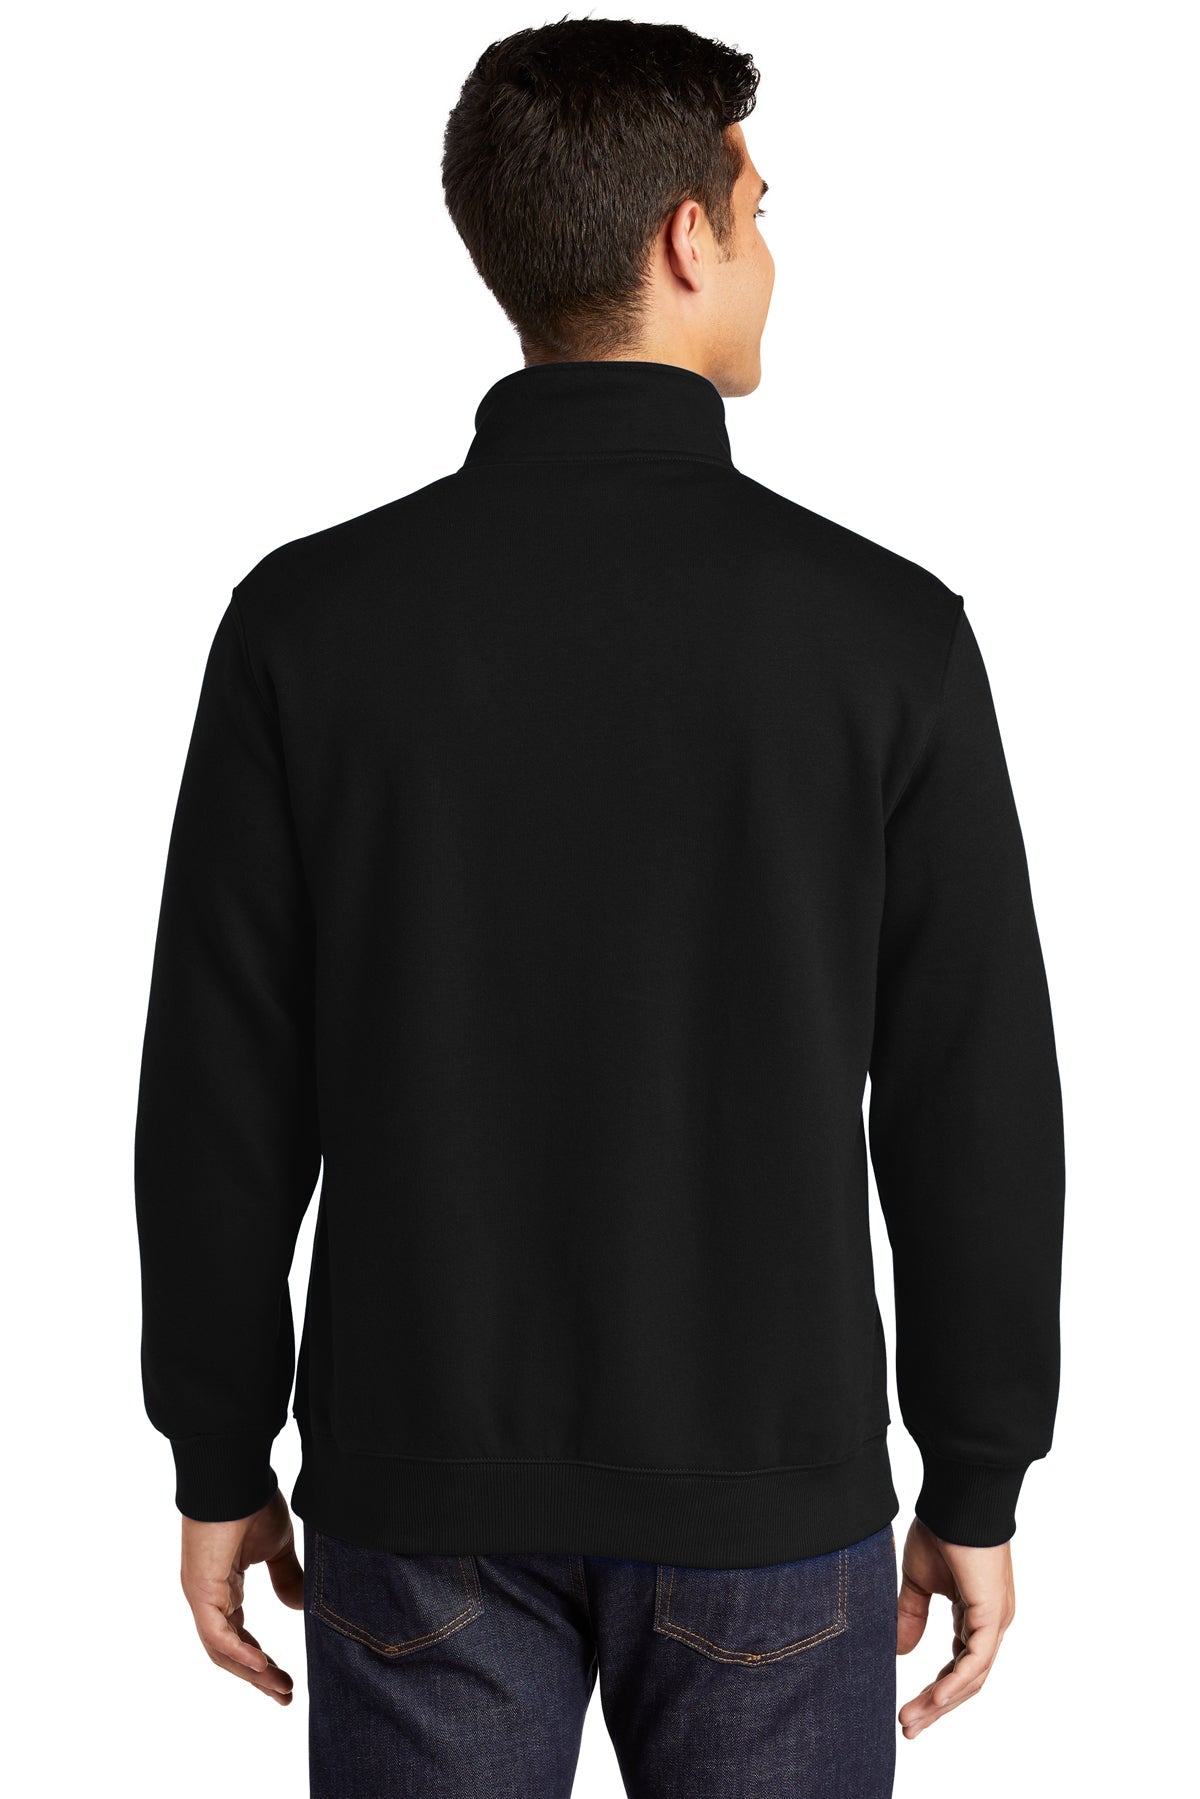 sport-tek_st253 _black_company_logo_sweatshirts